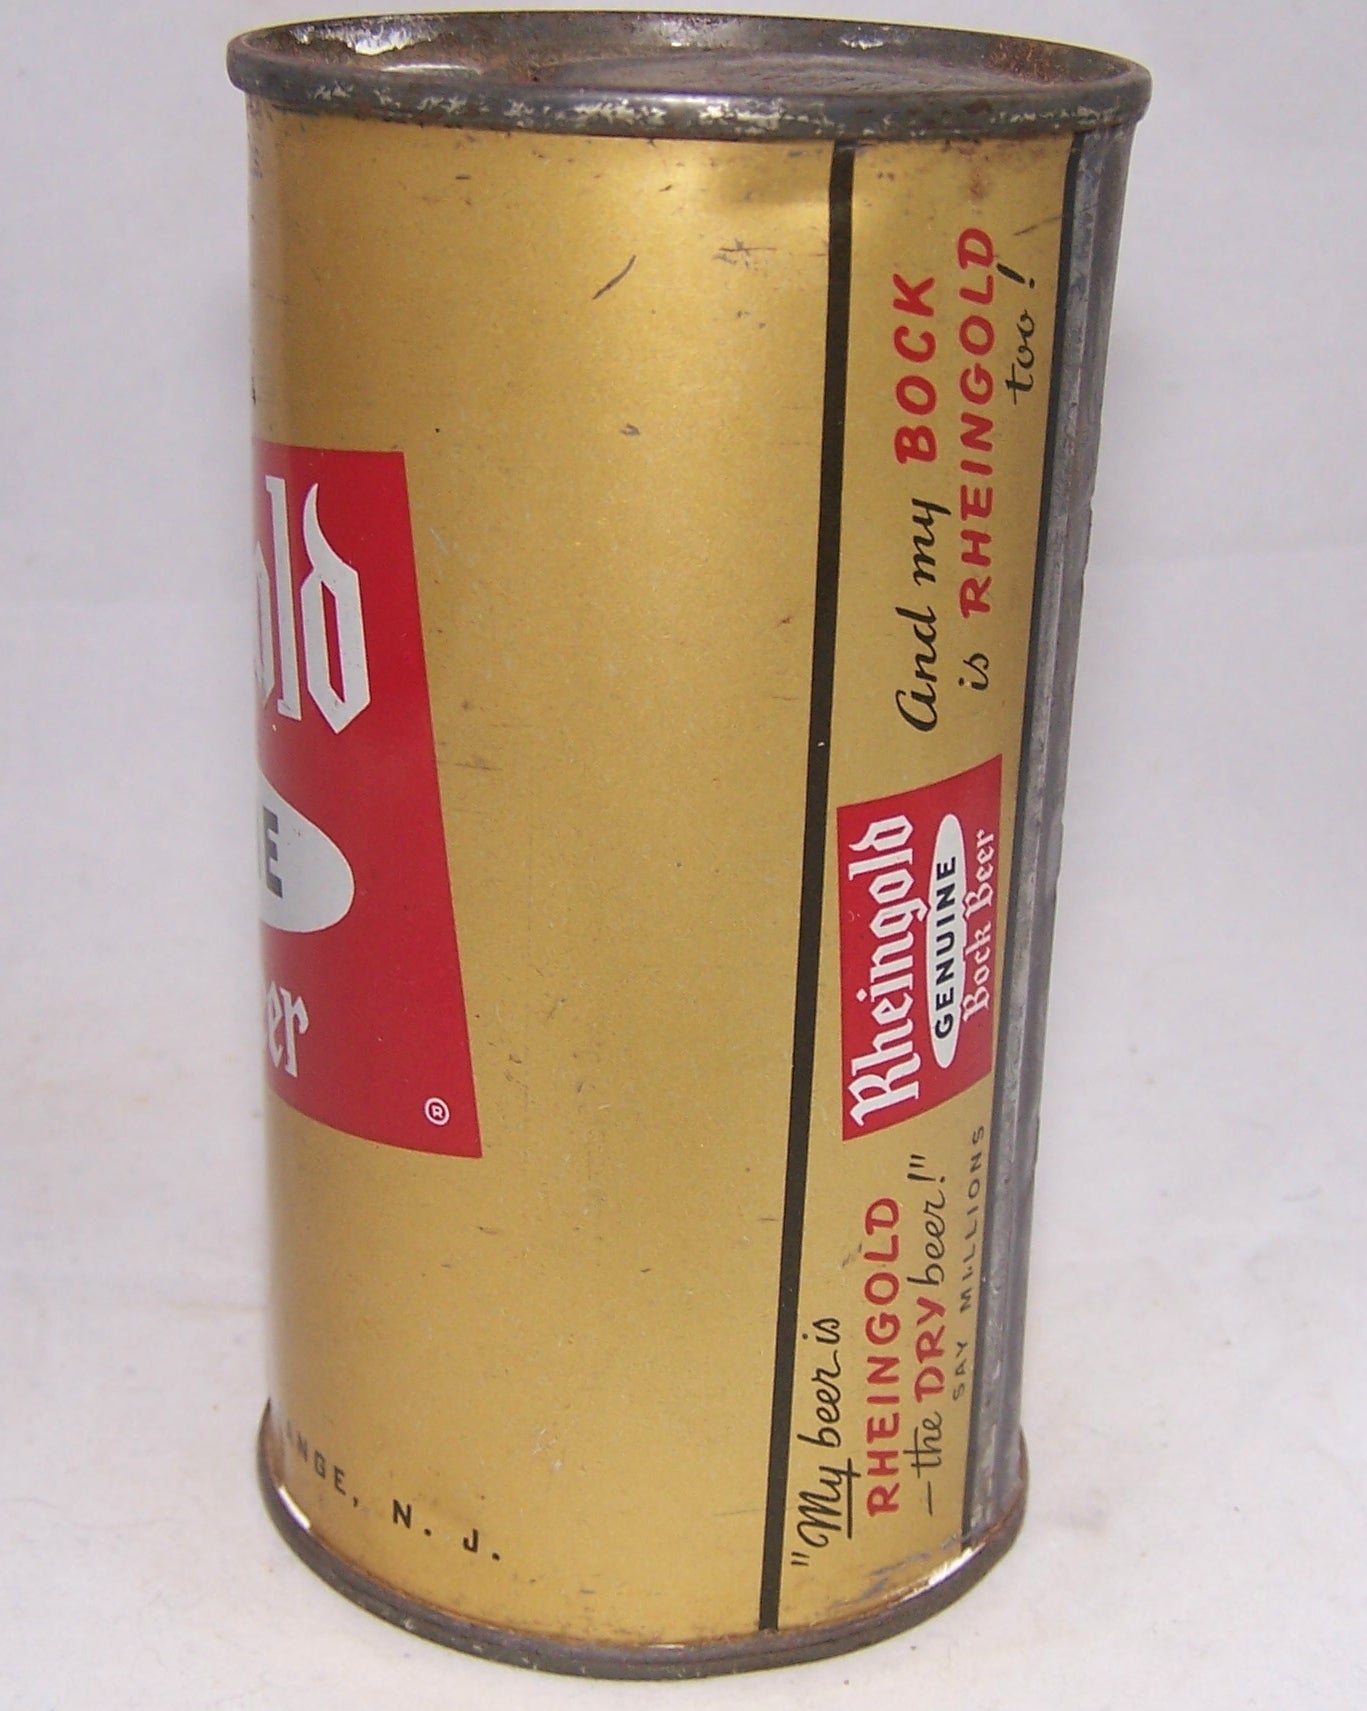 Rheingold Genuine Bock Beer, USBC 123-16, Grade 1- Sold on 05/24/18